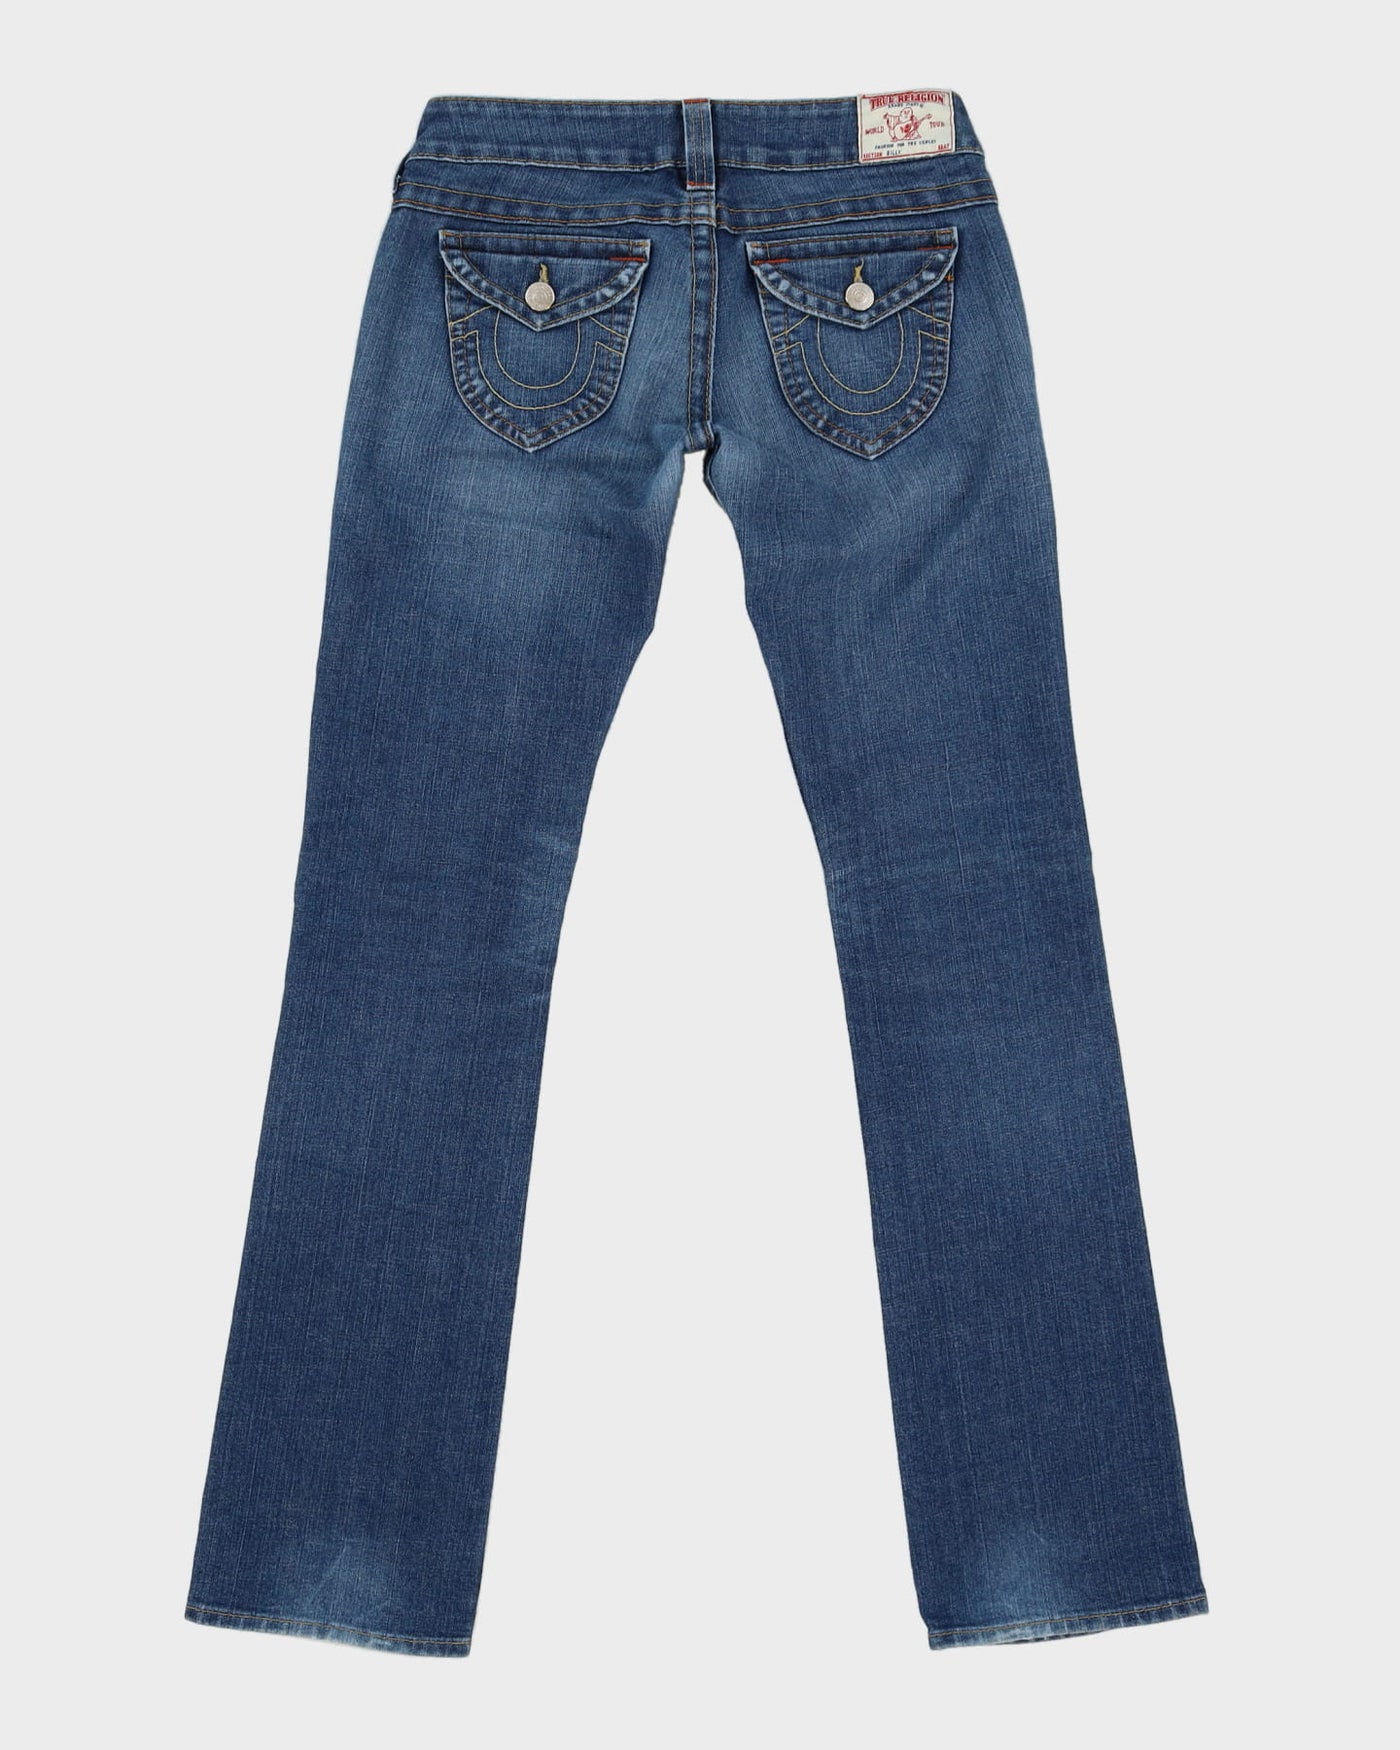 00s True Religion Contrast Stitch Dark Wash Blue Jeans - W31 L34